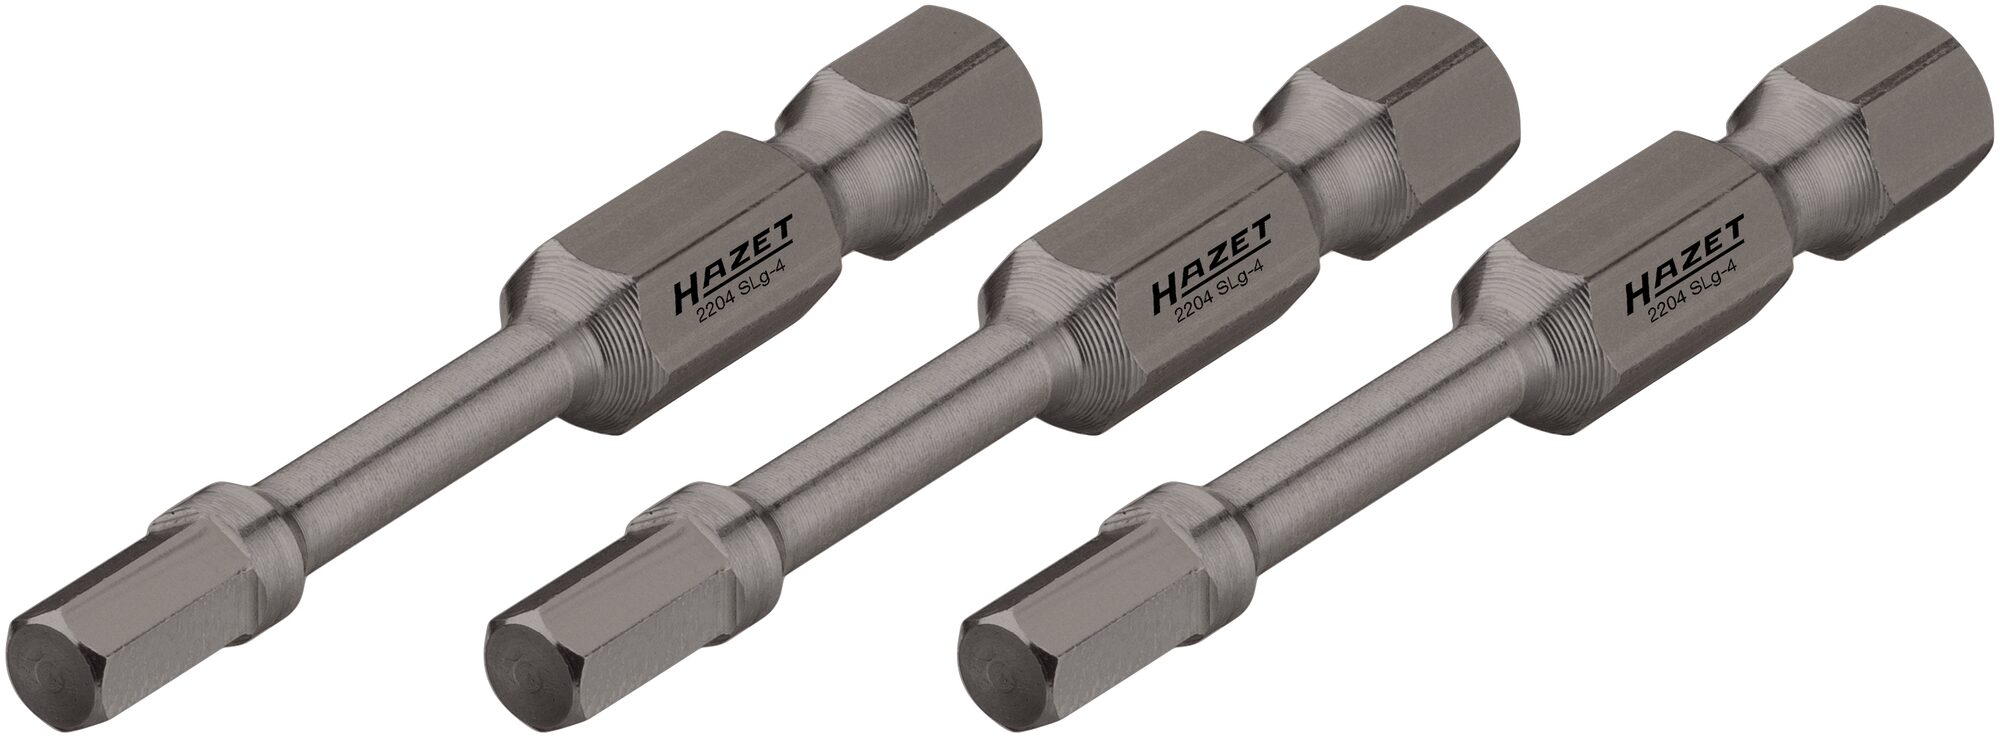 HAZET Schlag-, Maschinenschrauber Torsions-Bits 2204SLG-6/3 · Sechskant massiv 6,3 (1/4 Zoll) · Innen Sechskant Profil · 6 mm · Anzahl Werkzeuge: 3